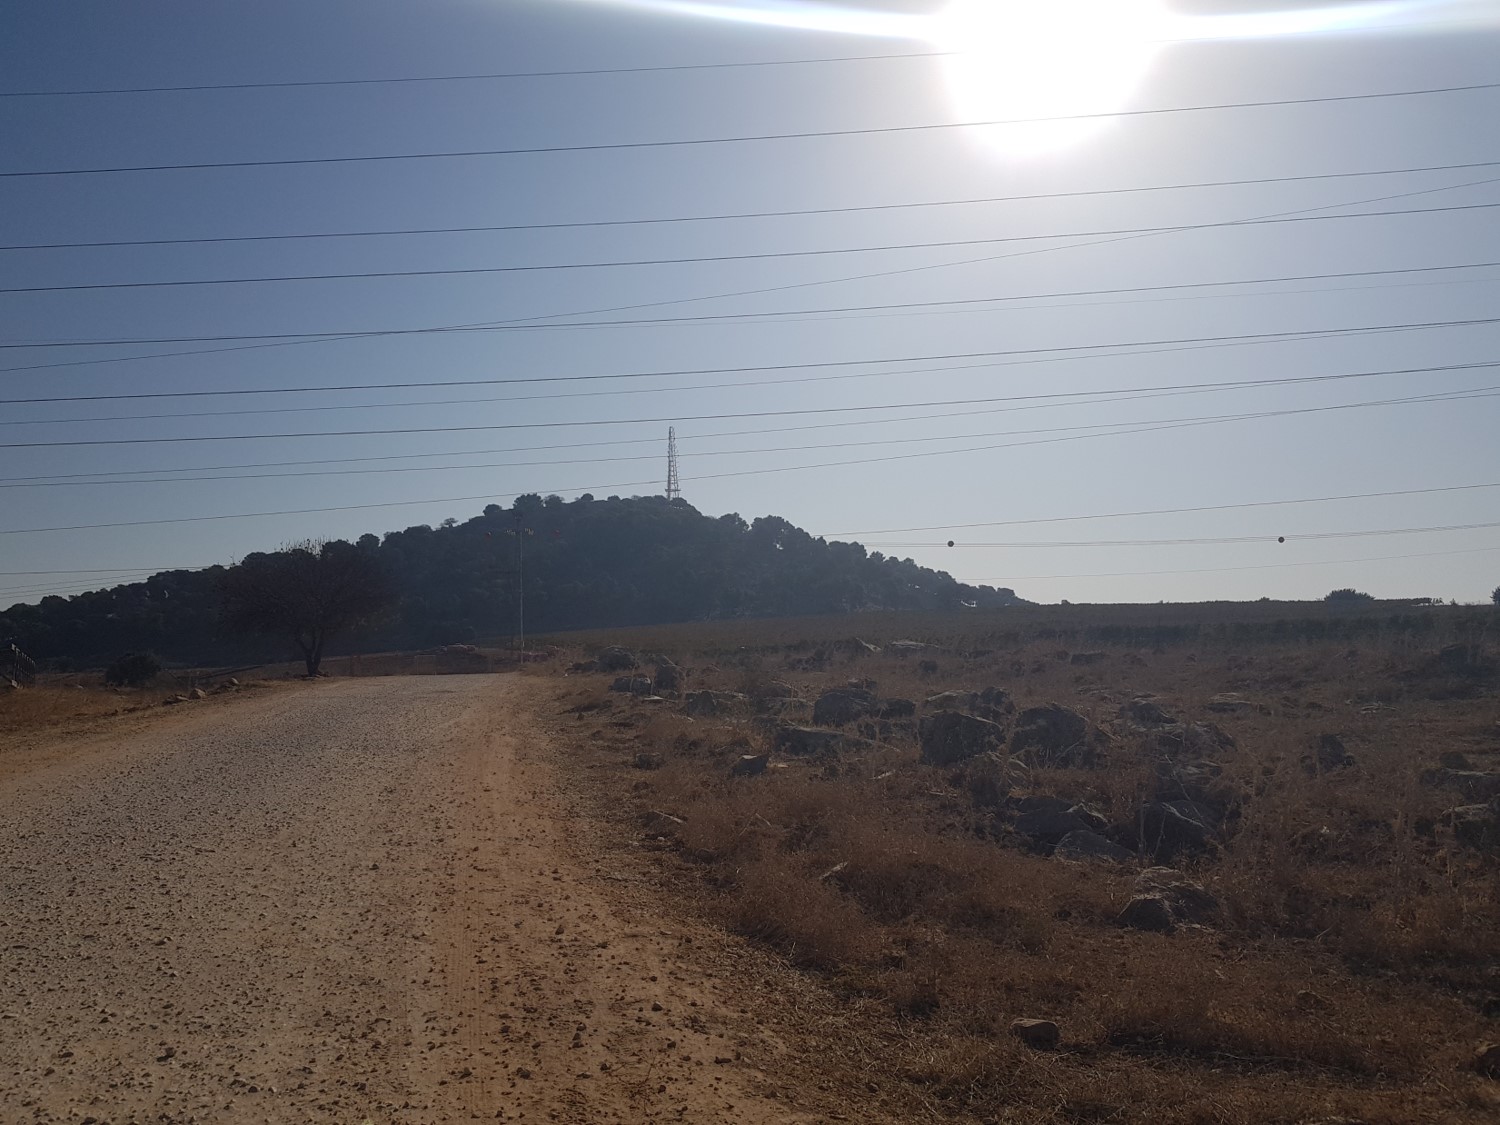 Keren Naftali on the Israel National Trail